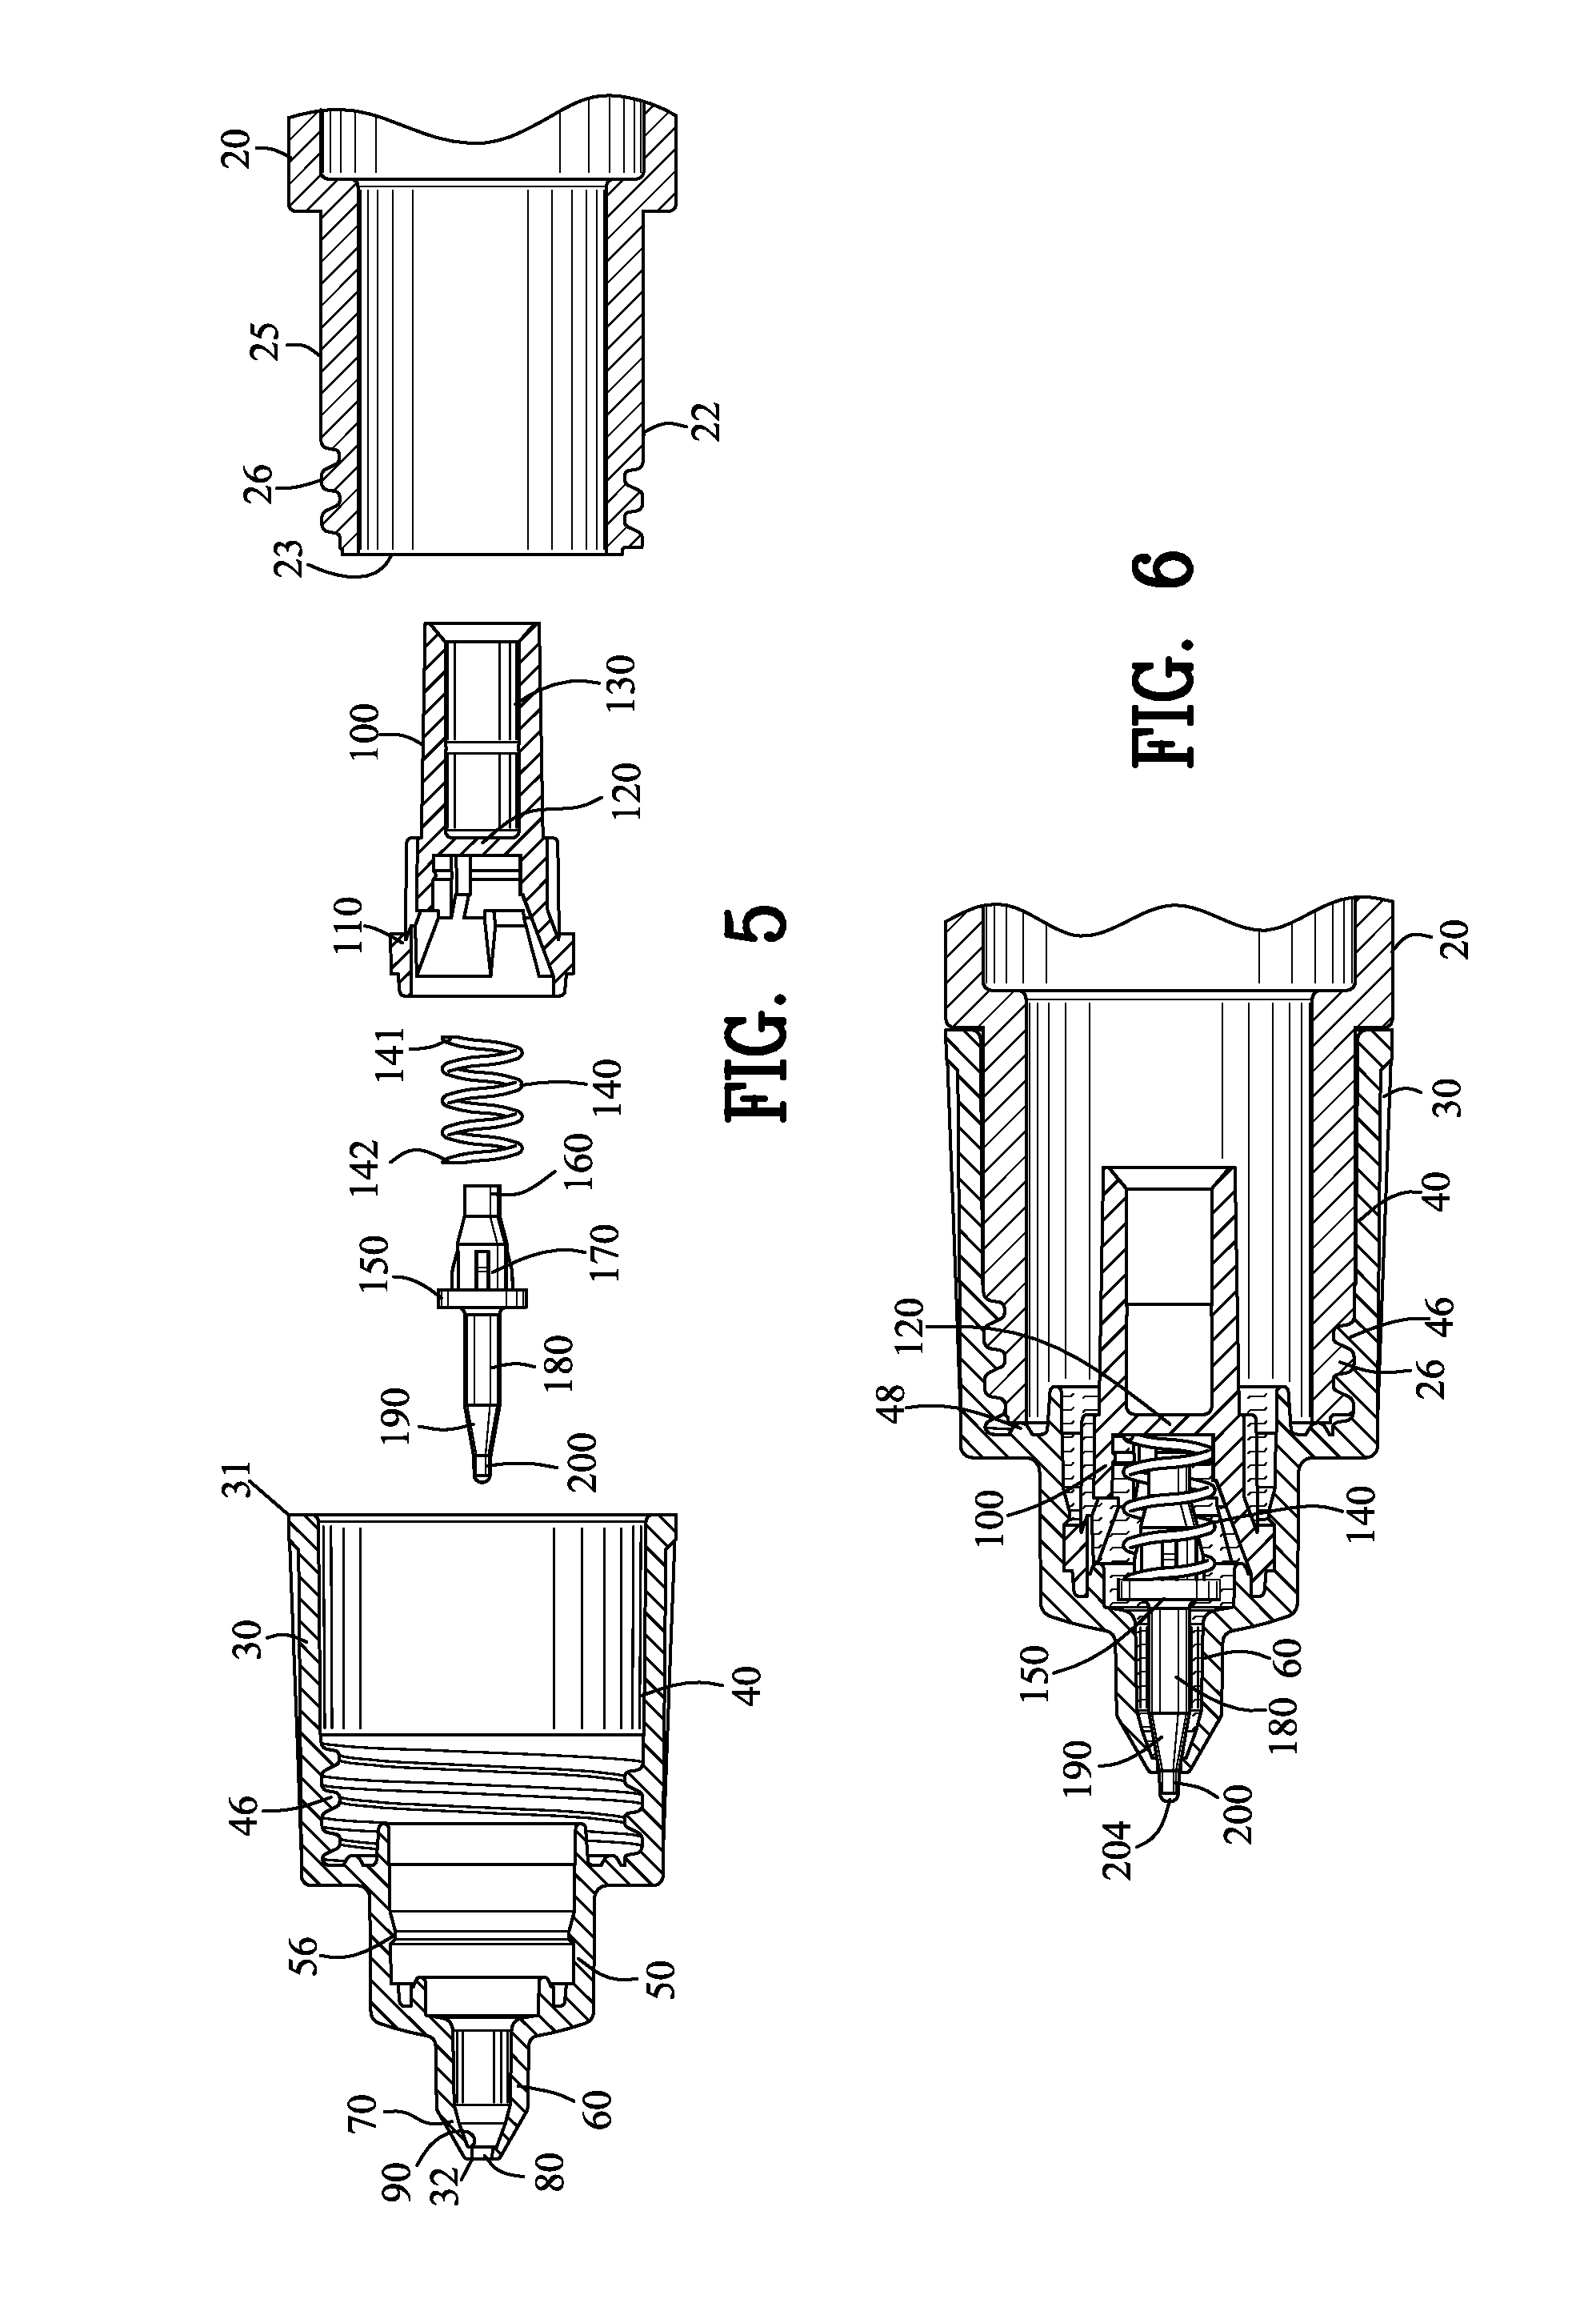 Precision liquid applicator